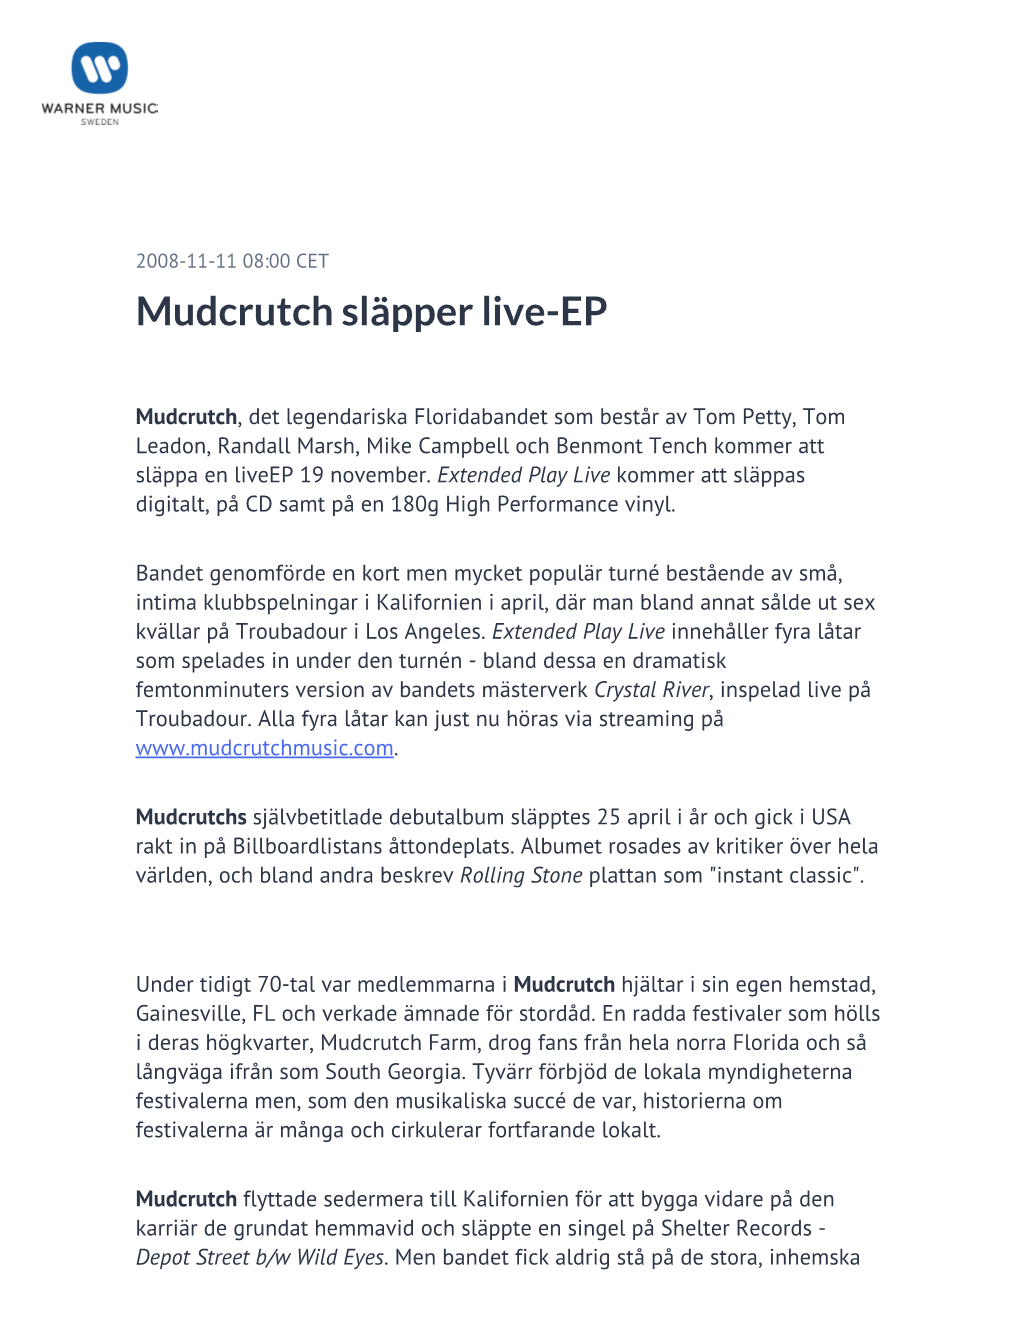 Mudcrutch Släpper Live-EP